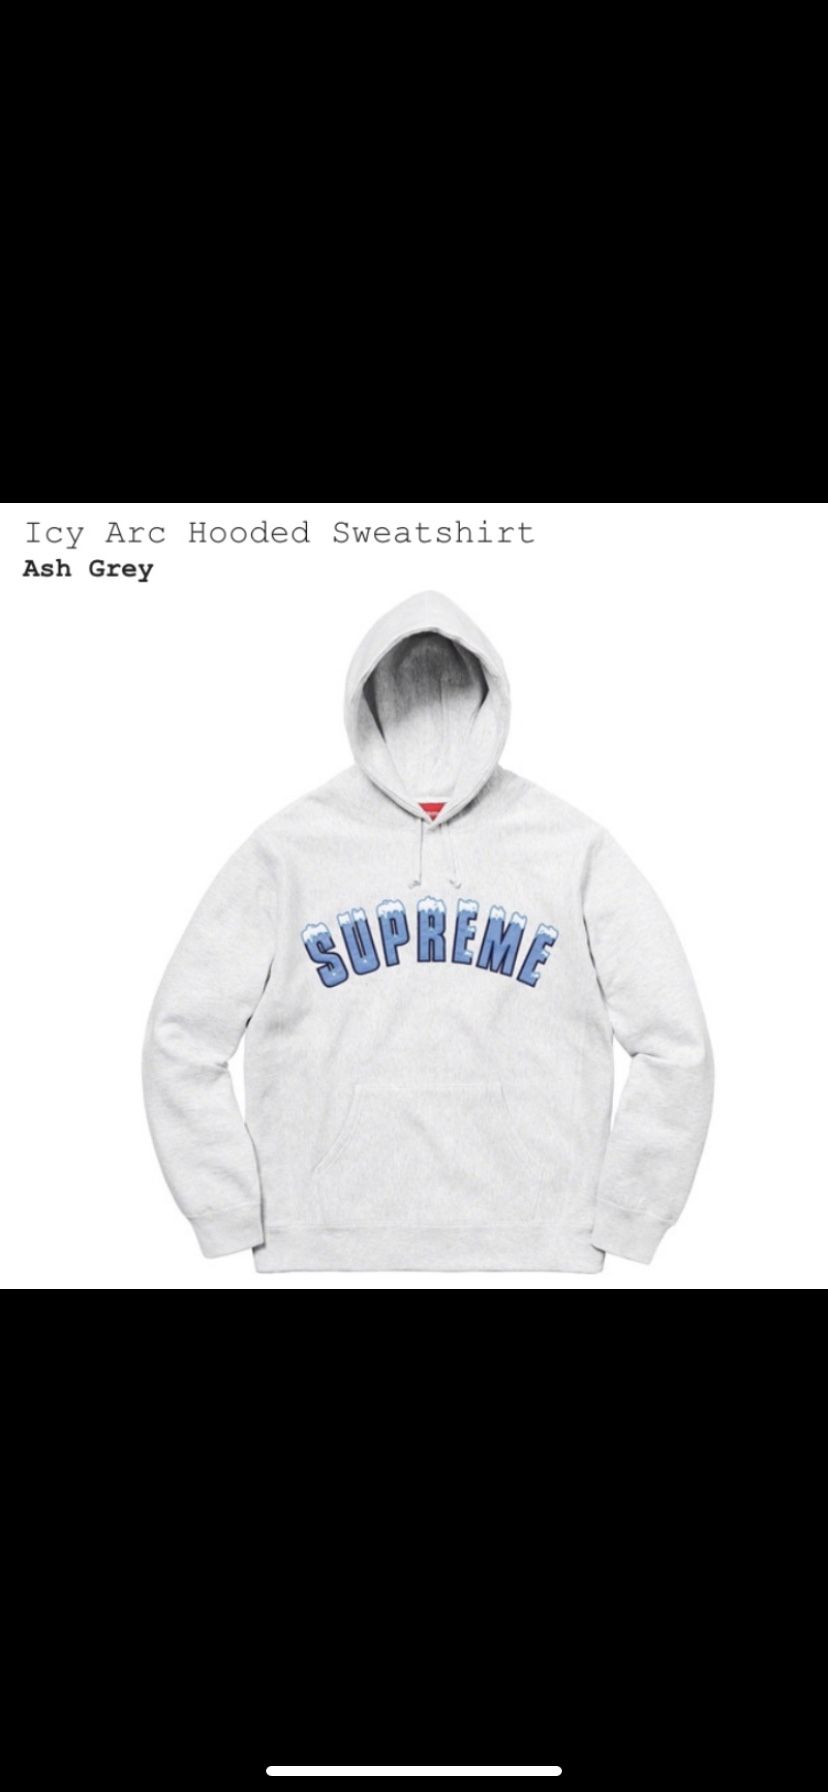 Supreme ice arc hoodie